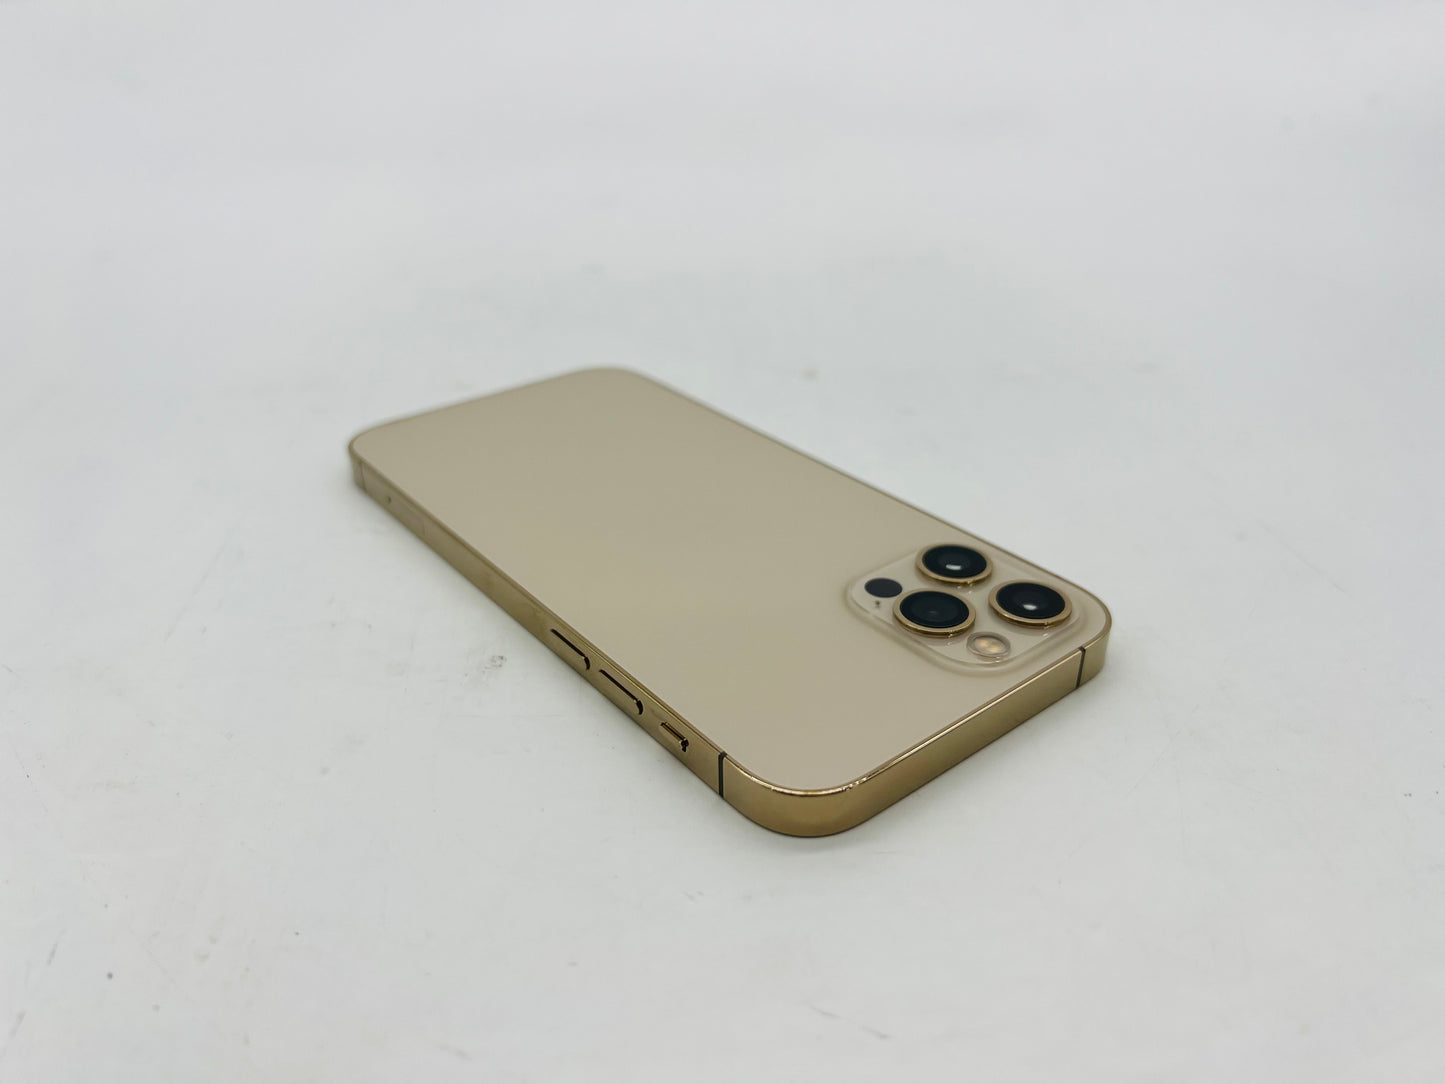 Apple iPhone 12 Pro GSM/CDMA Unlocked (128GB) "Gold" Grade A-